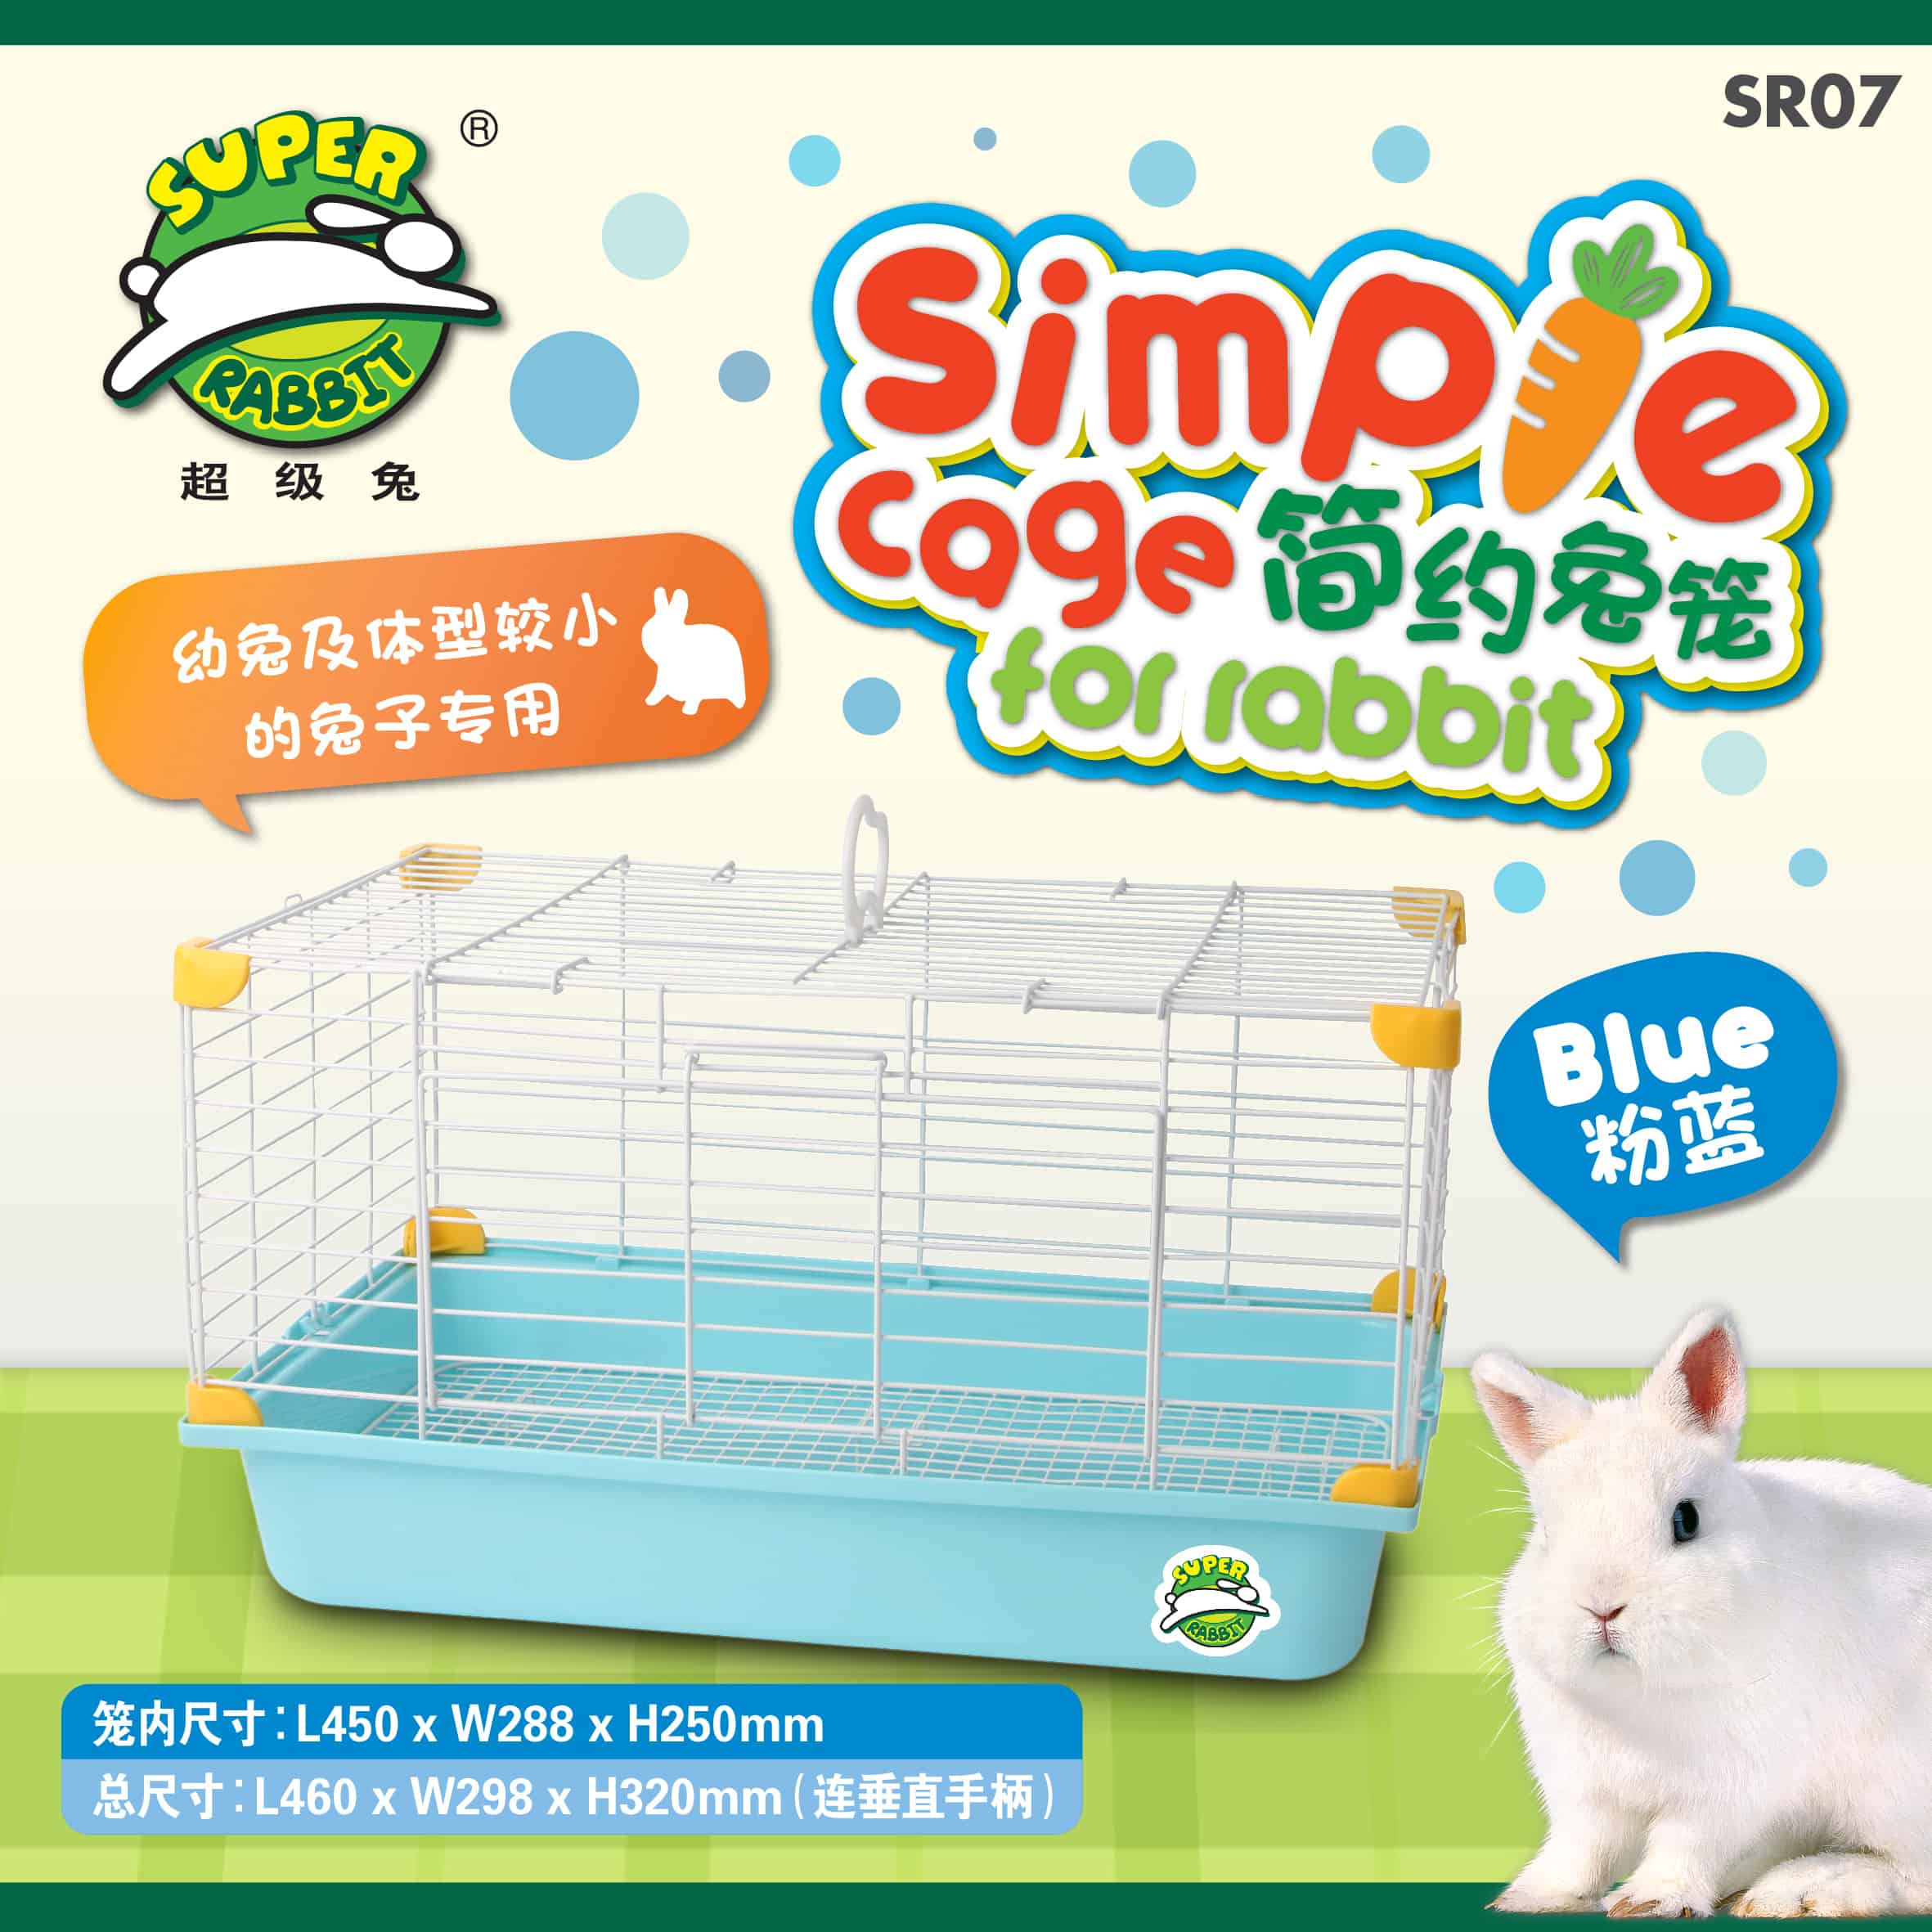 Super Rabbit SR07 Simple Cage For Rabbit Blue